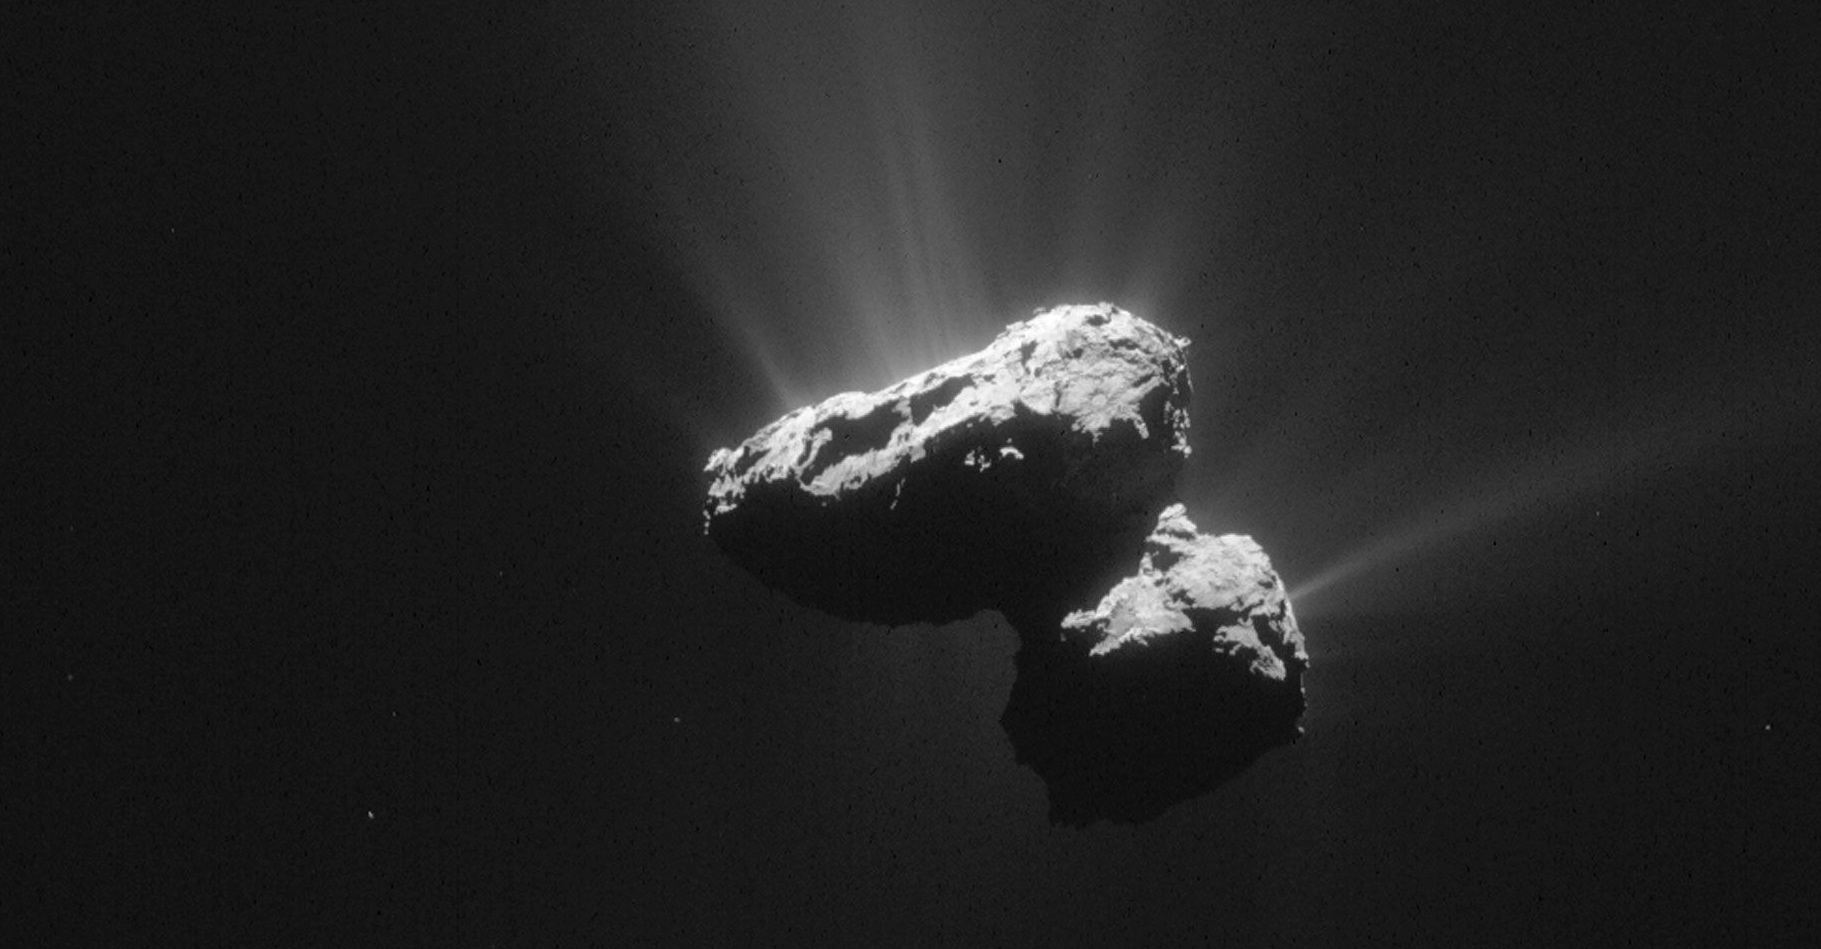 Le noyau bilobé de la comète 67P/Churyumov-Gerasimenko, alias Tchouri, photographié par Rosetta. Sa forme lui a valu d’être surnommée le «&nbsp;canard de bain&nbsp;». © Esa, Rosetta, NavCam, CC BY-SA IGO 3.0